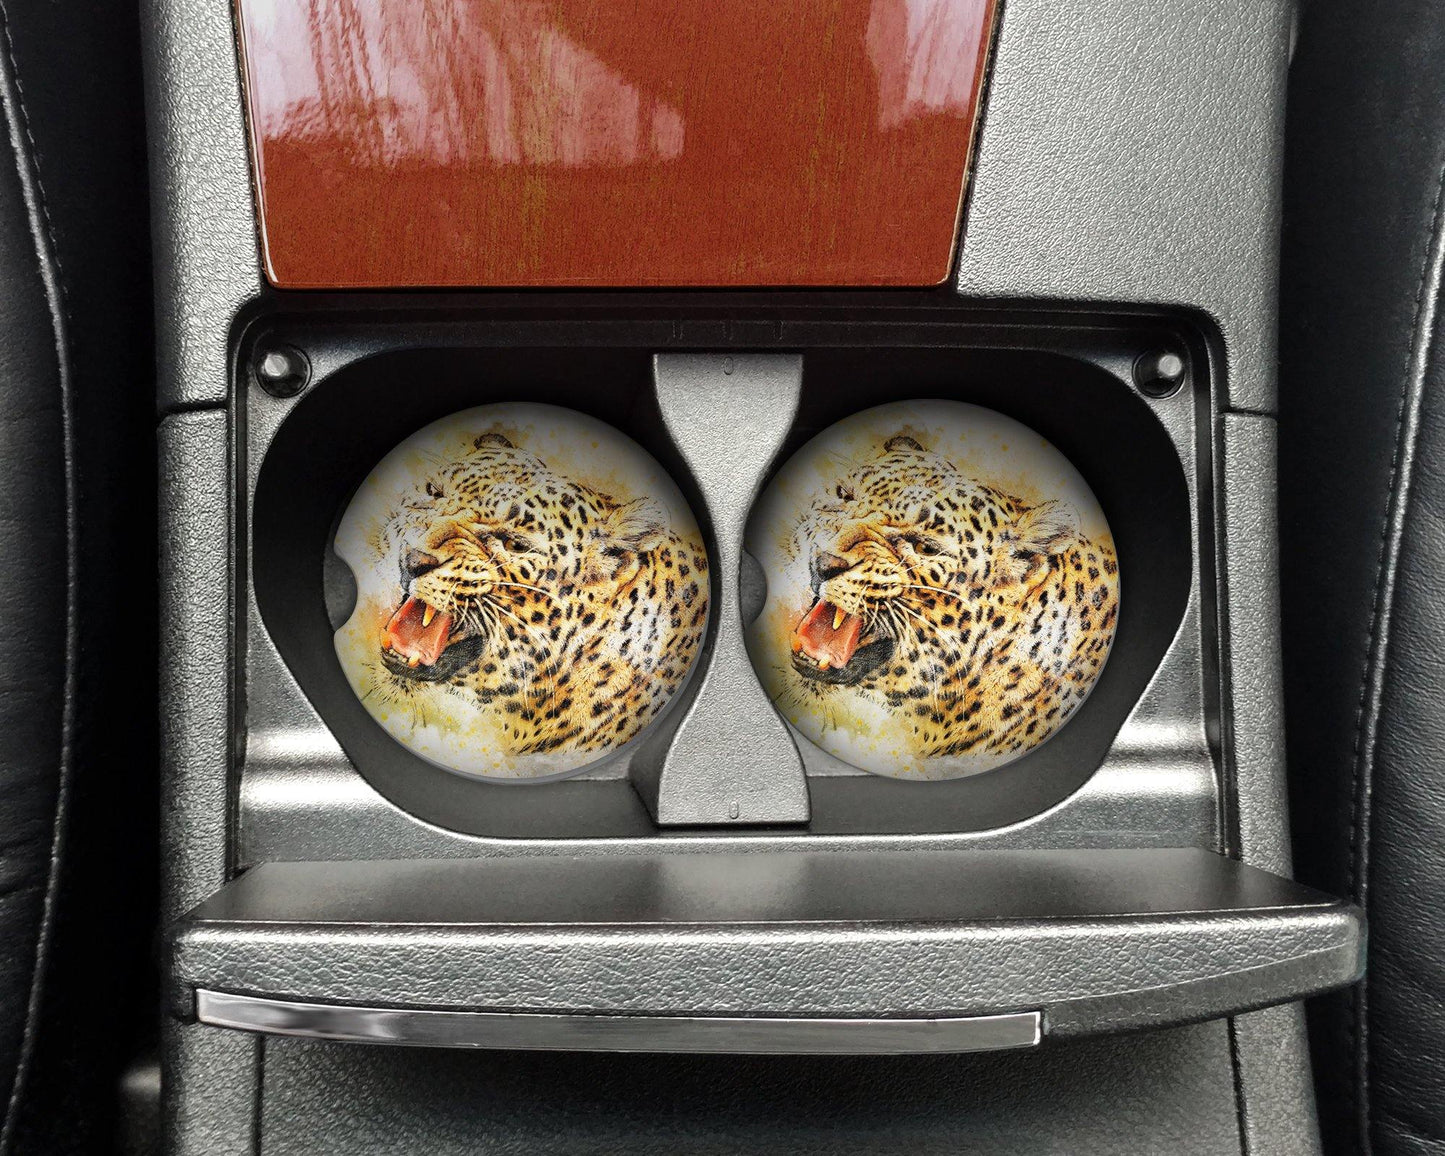 Watercolor style Roaring Leopard Sandstone Car Coasters set of 2 - Schoppix Gifts